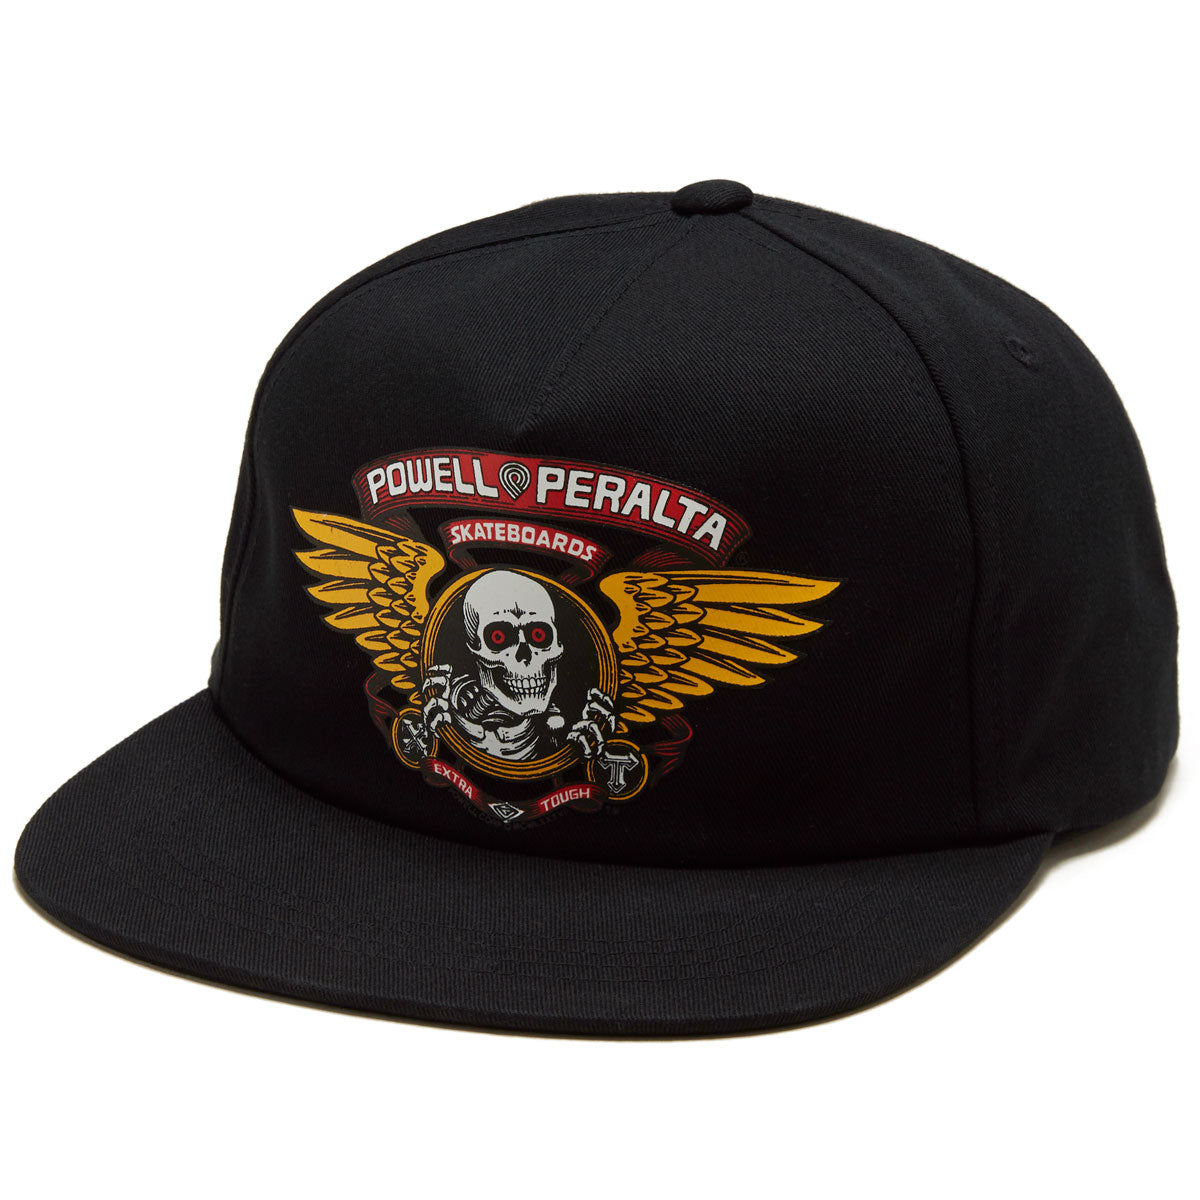 Powell-Peralta Winged Ripper Snapback Hat - Black image 1